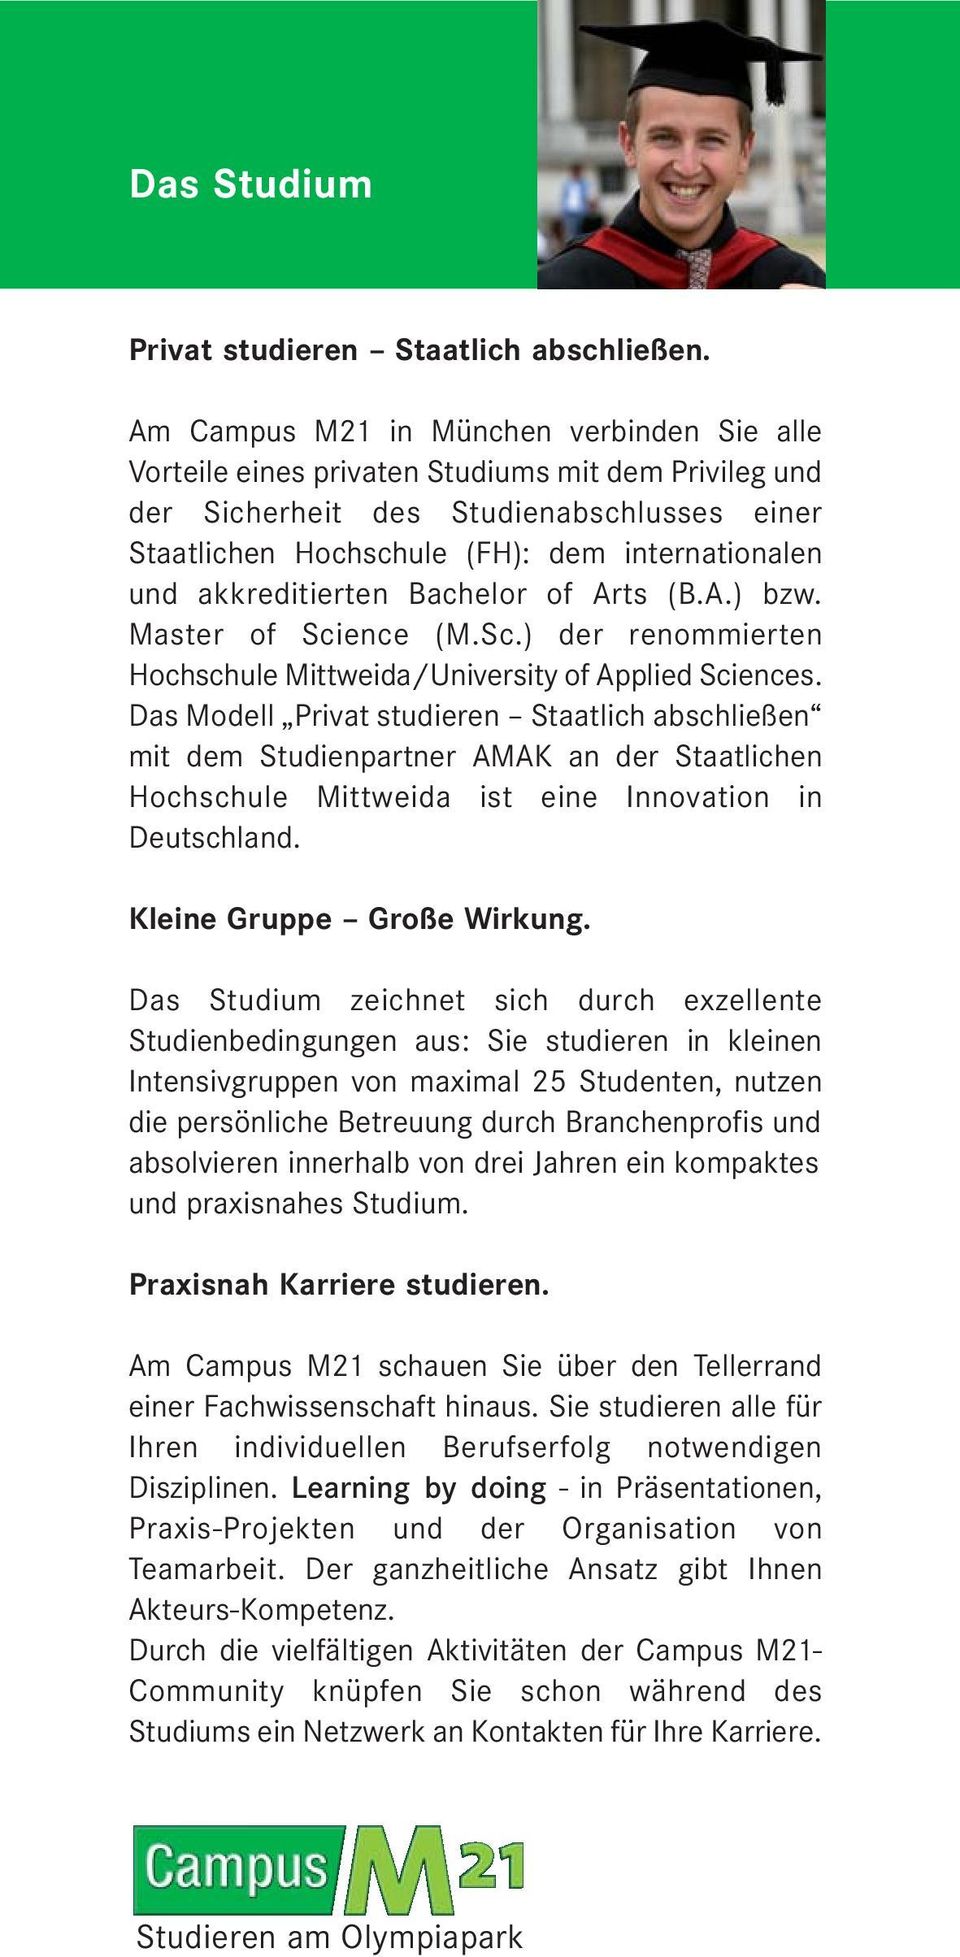 akkreditierten Bachelor of Arts (B.A.) bzw. Master of Science (M.Sc.) der renommierten Hochschule Mittweida/University of Applied Sciences.